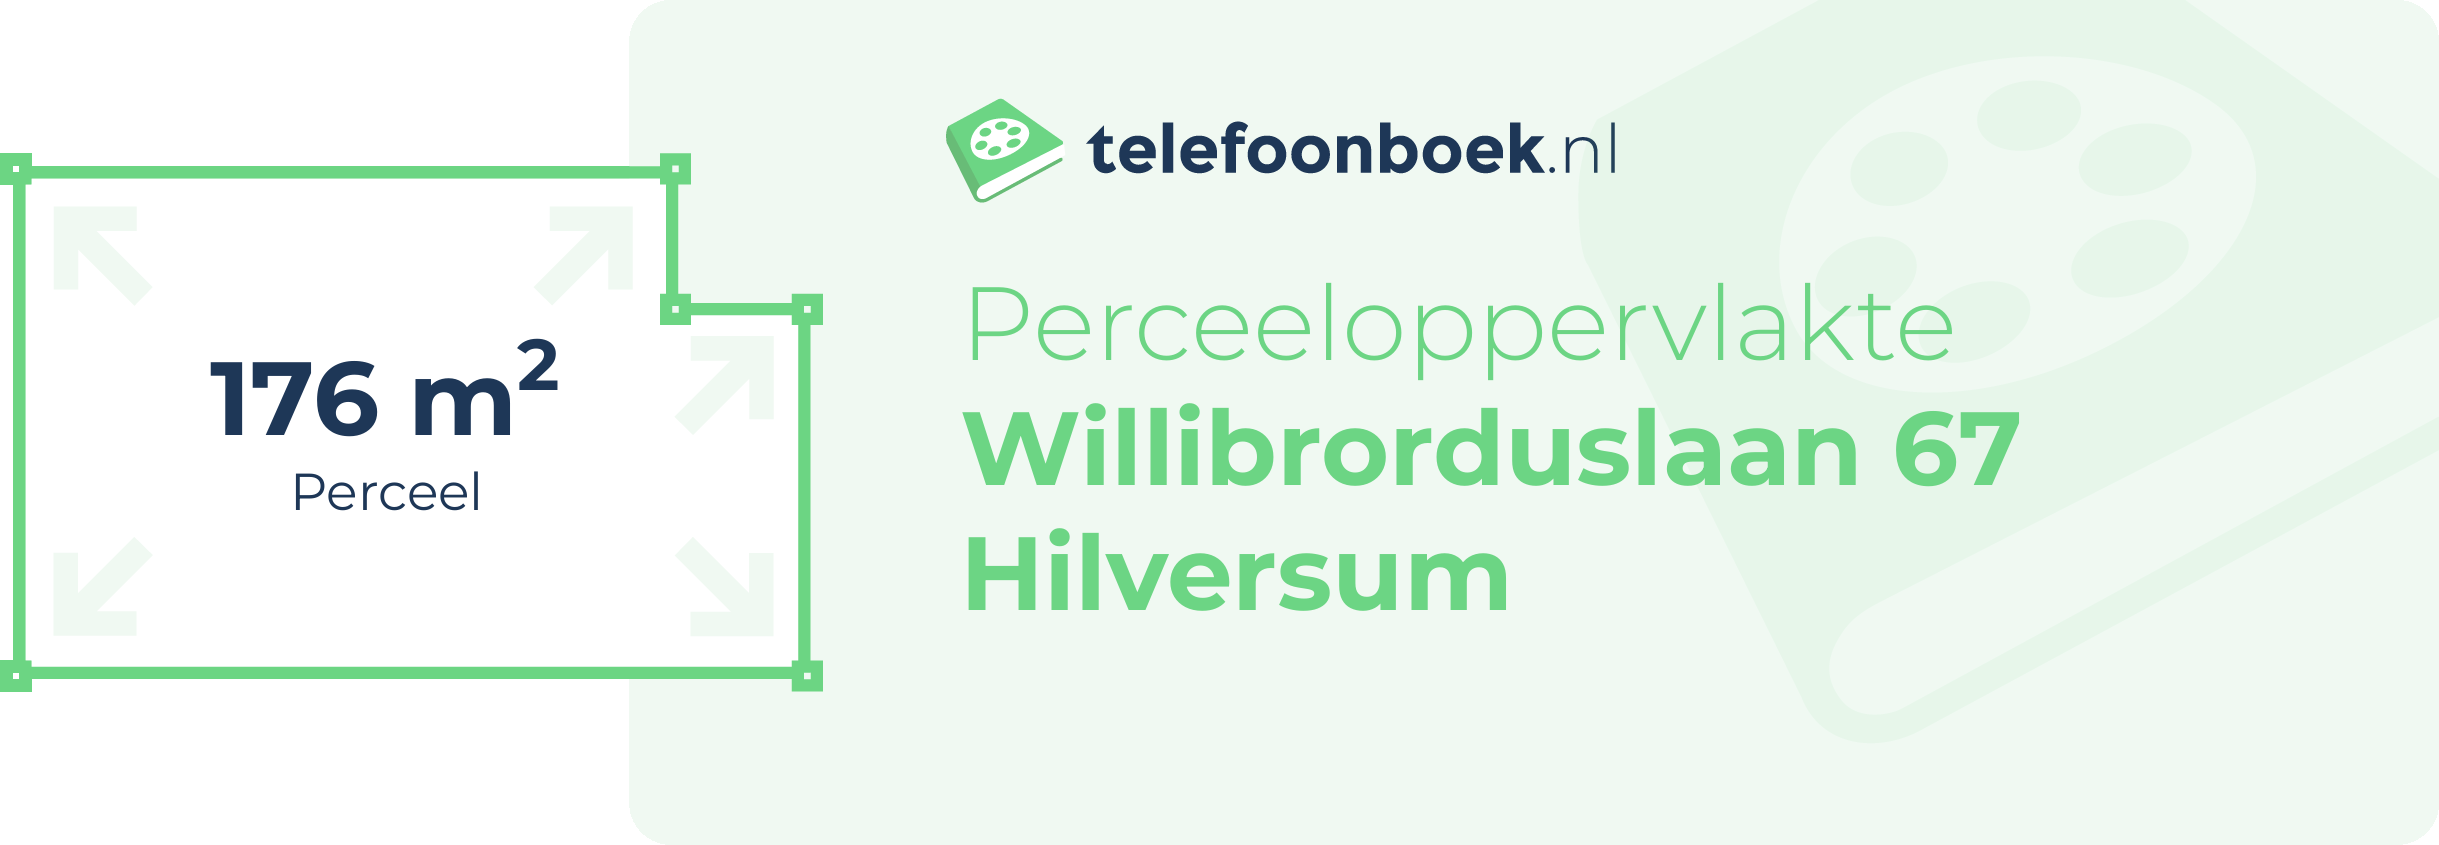 Perceeloppervlakte Willibrorduslaan 67 Hilversum